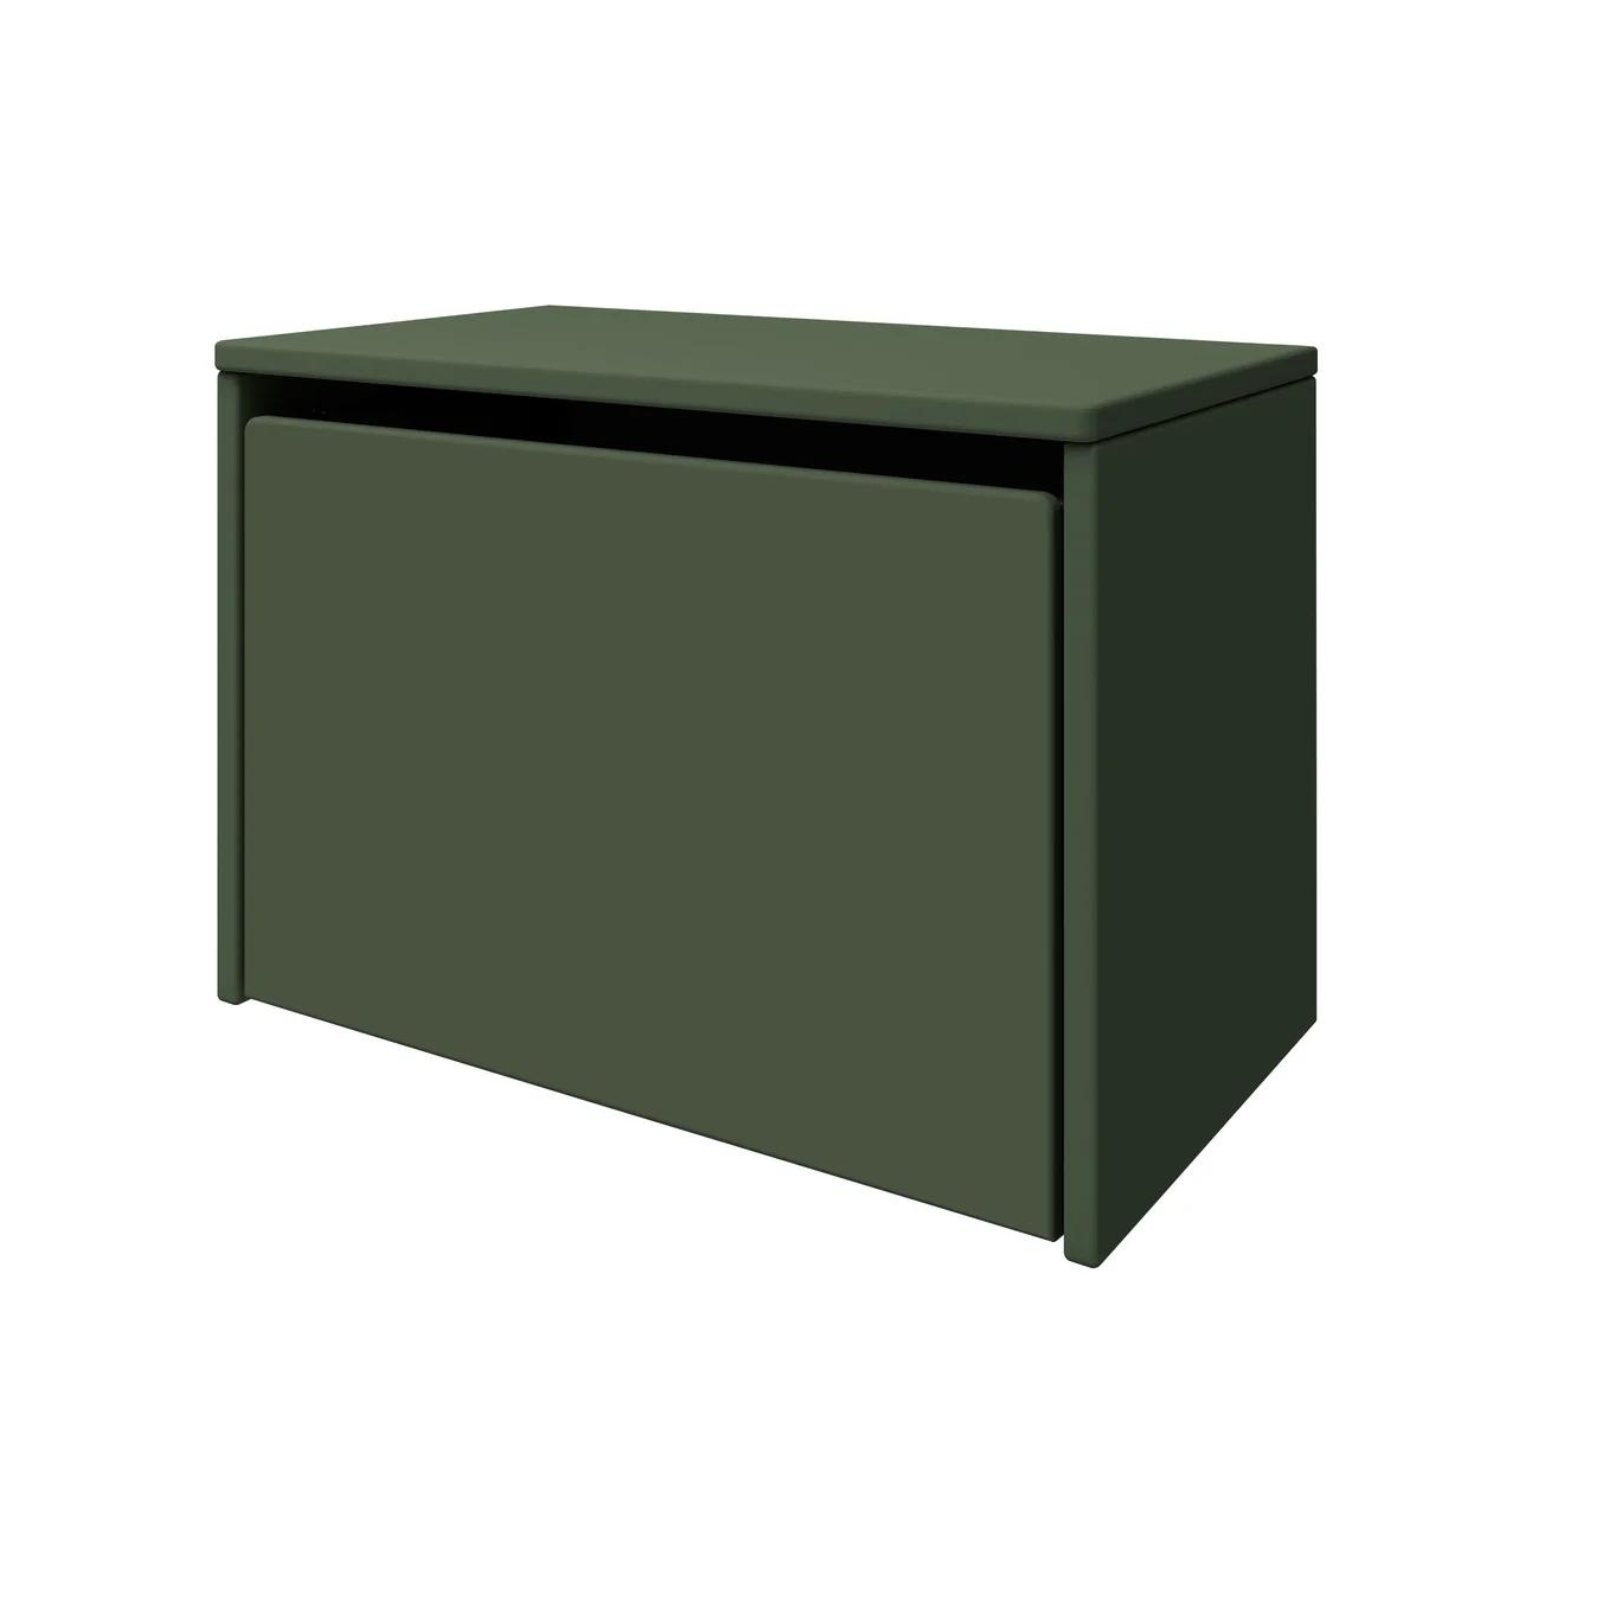 FLEXA Storage bench three in one in deep green